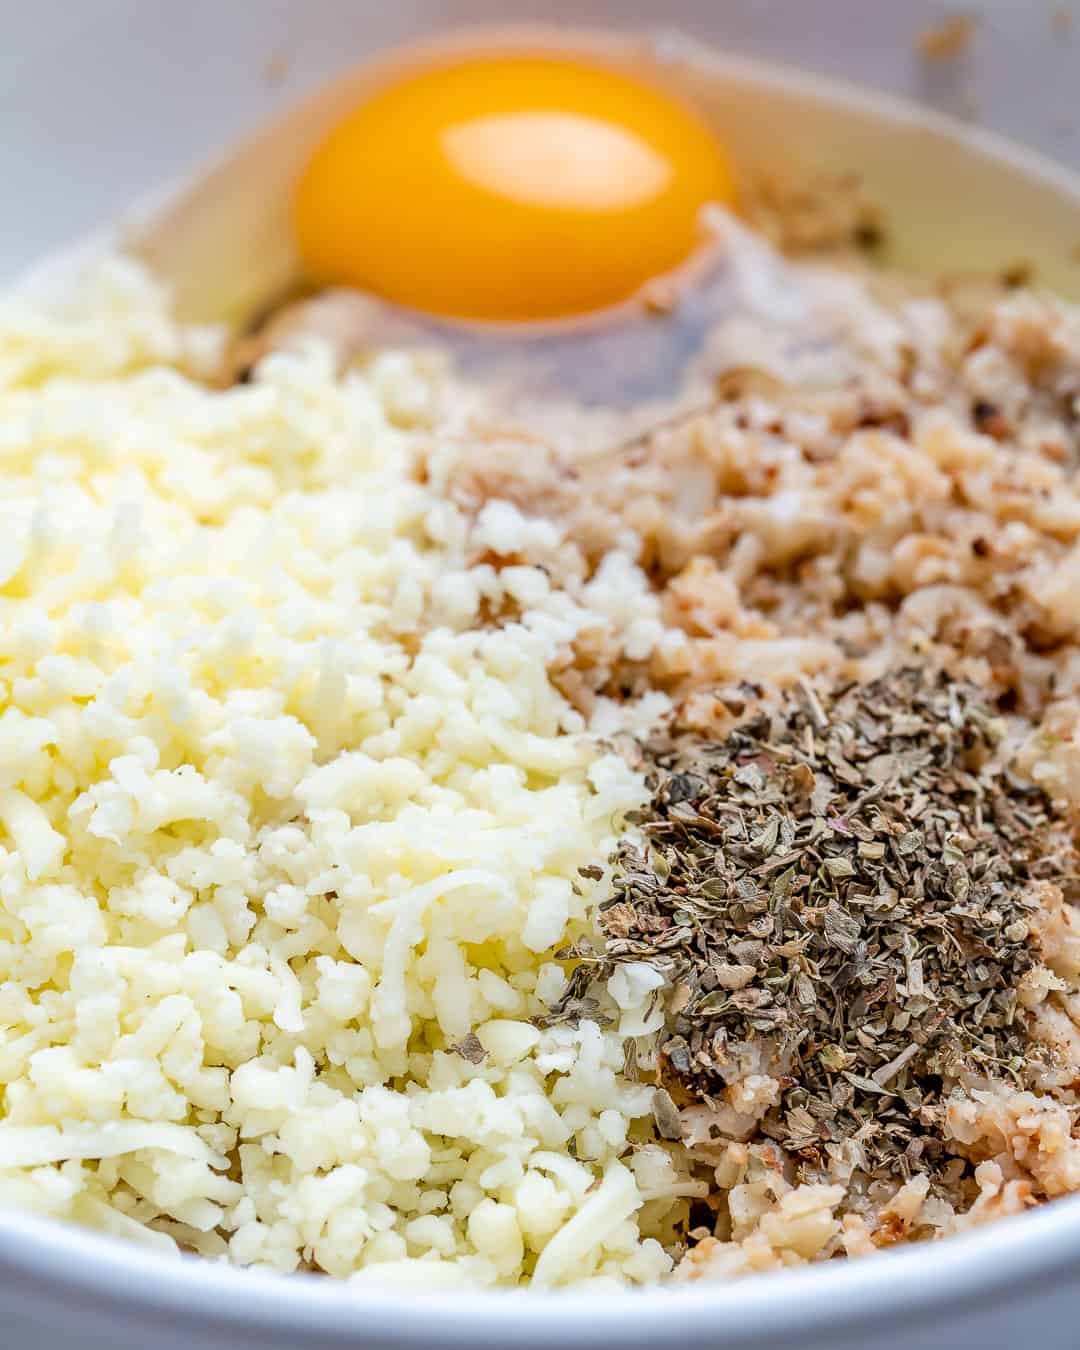 Mix cauliflower rice with egg and seasonings.